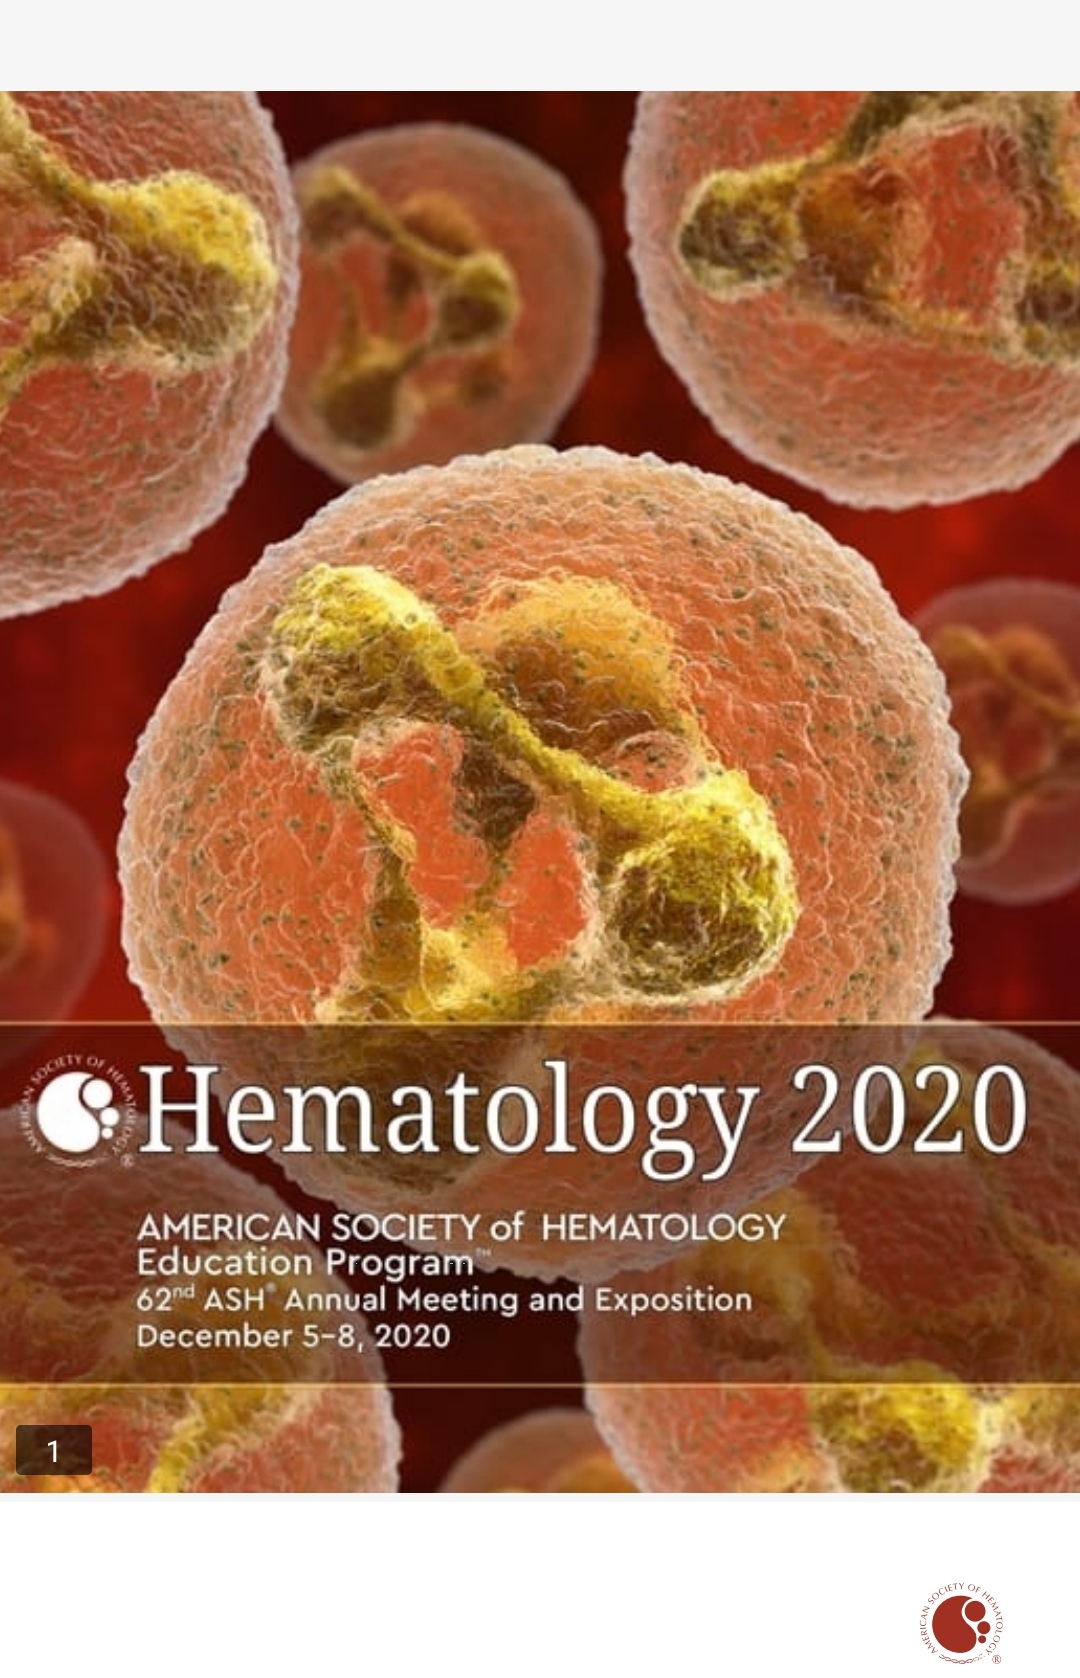 Download Book "Hematology 2020 AMERICAN SOCIETY OF HEMATOLOGY EDUCATION